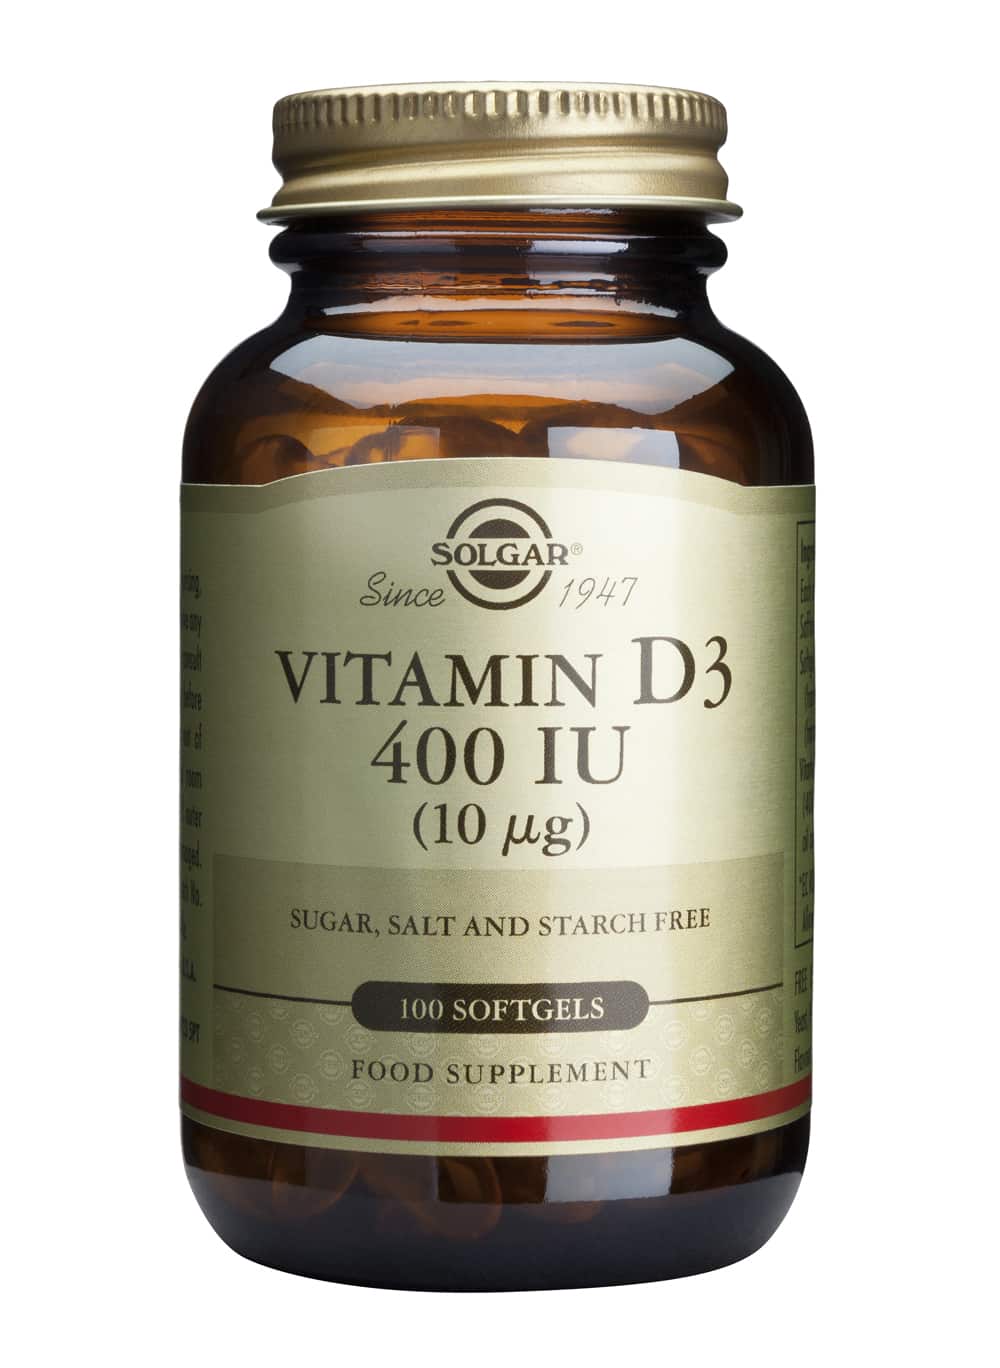 Solgar Vitamin D-3 10 Âµg/400 IU